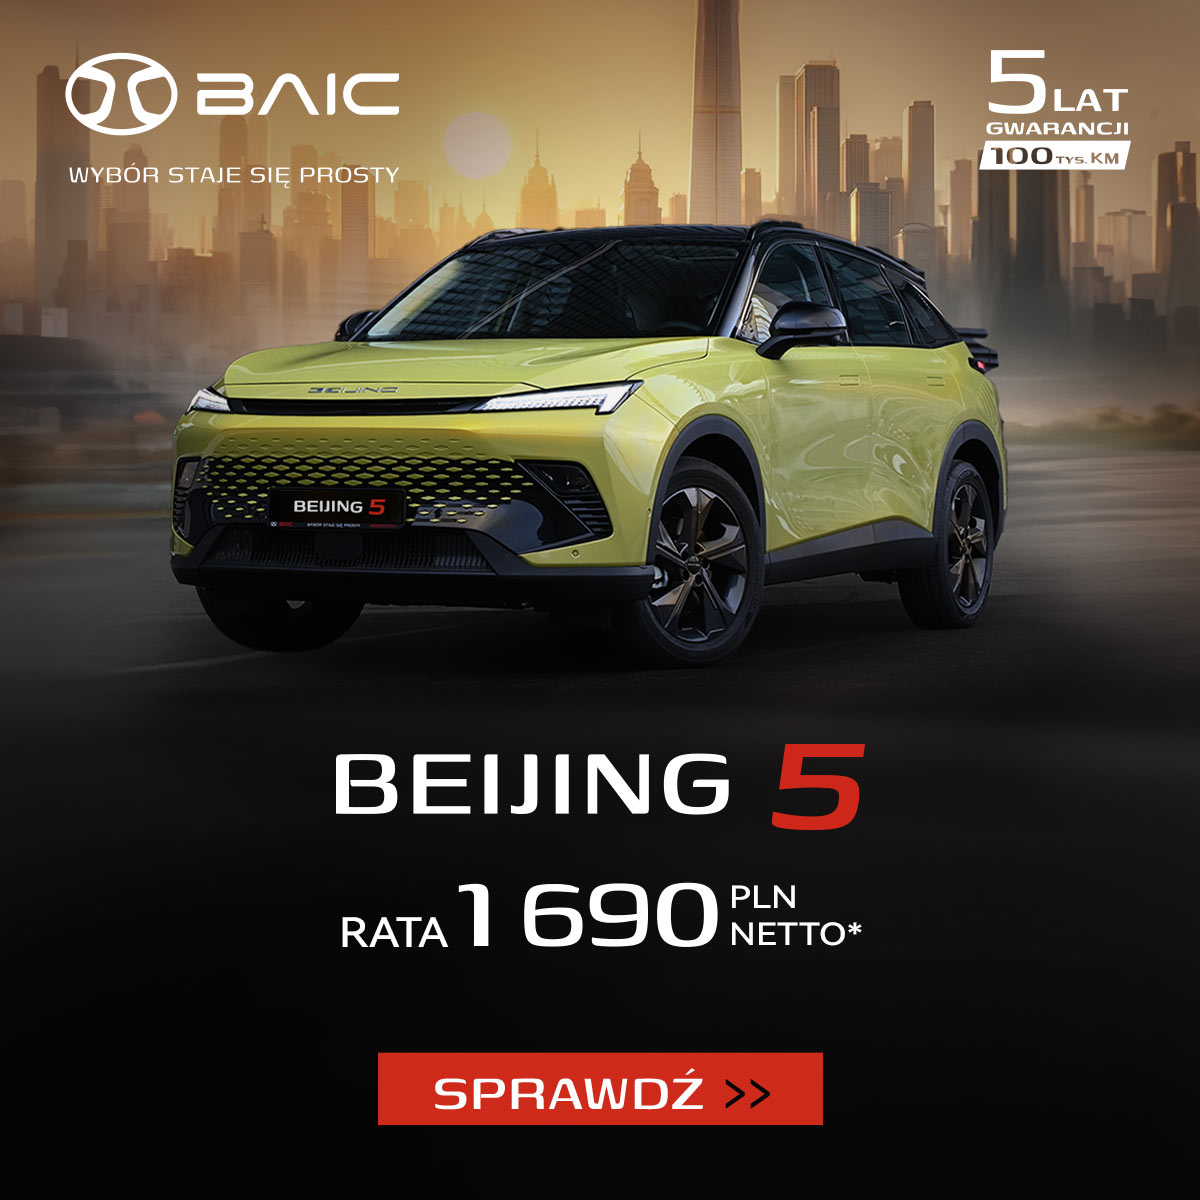 Leasing BAIC Beijing 5